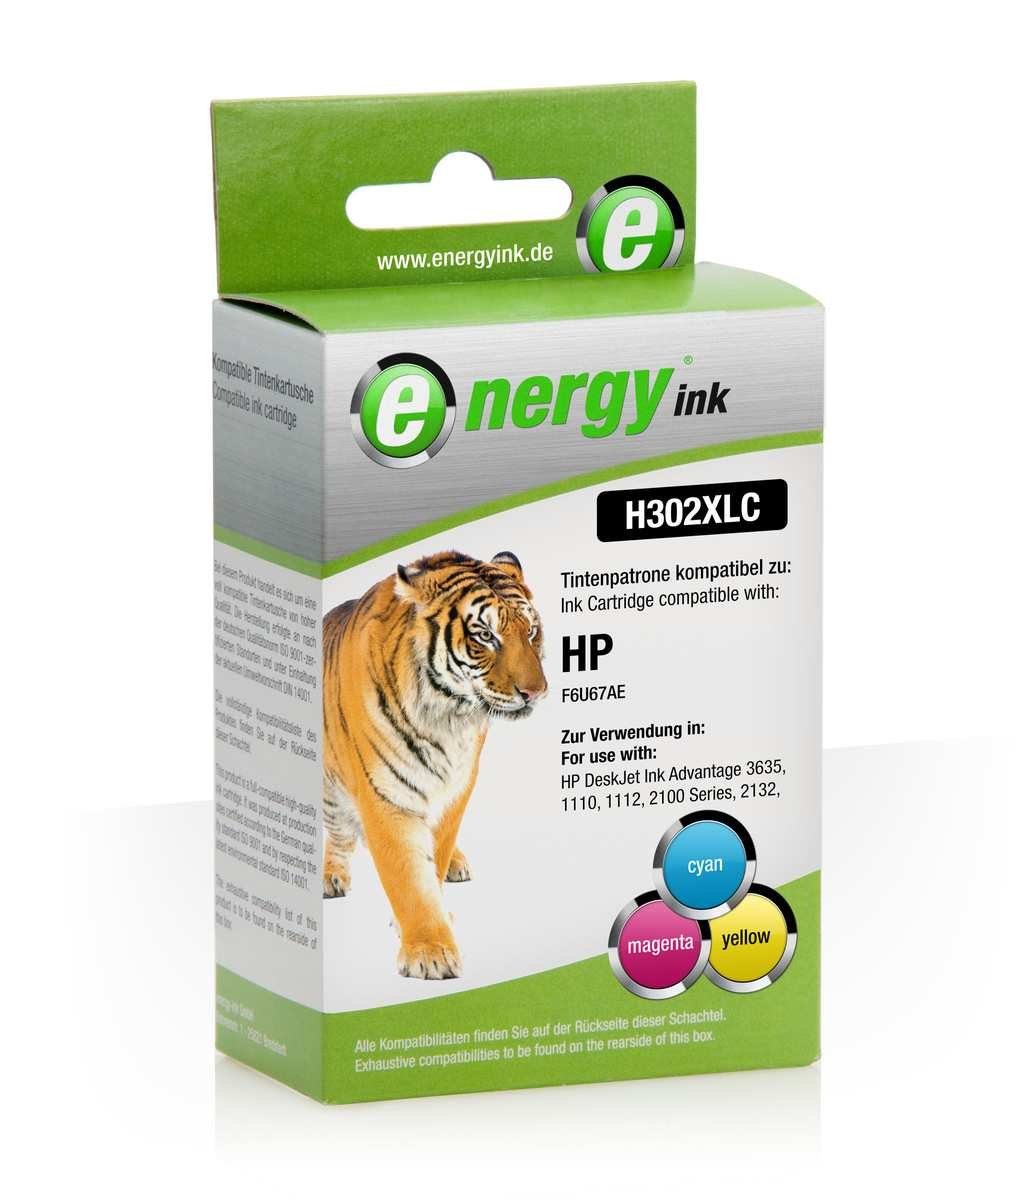 Energy-ink H302XLC Tintenpatrone